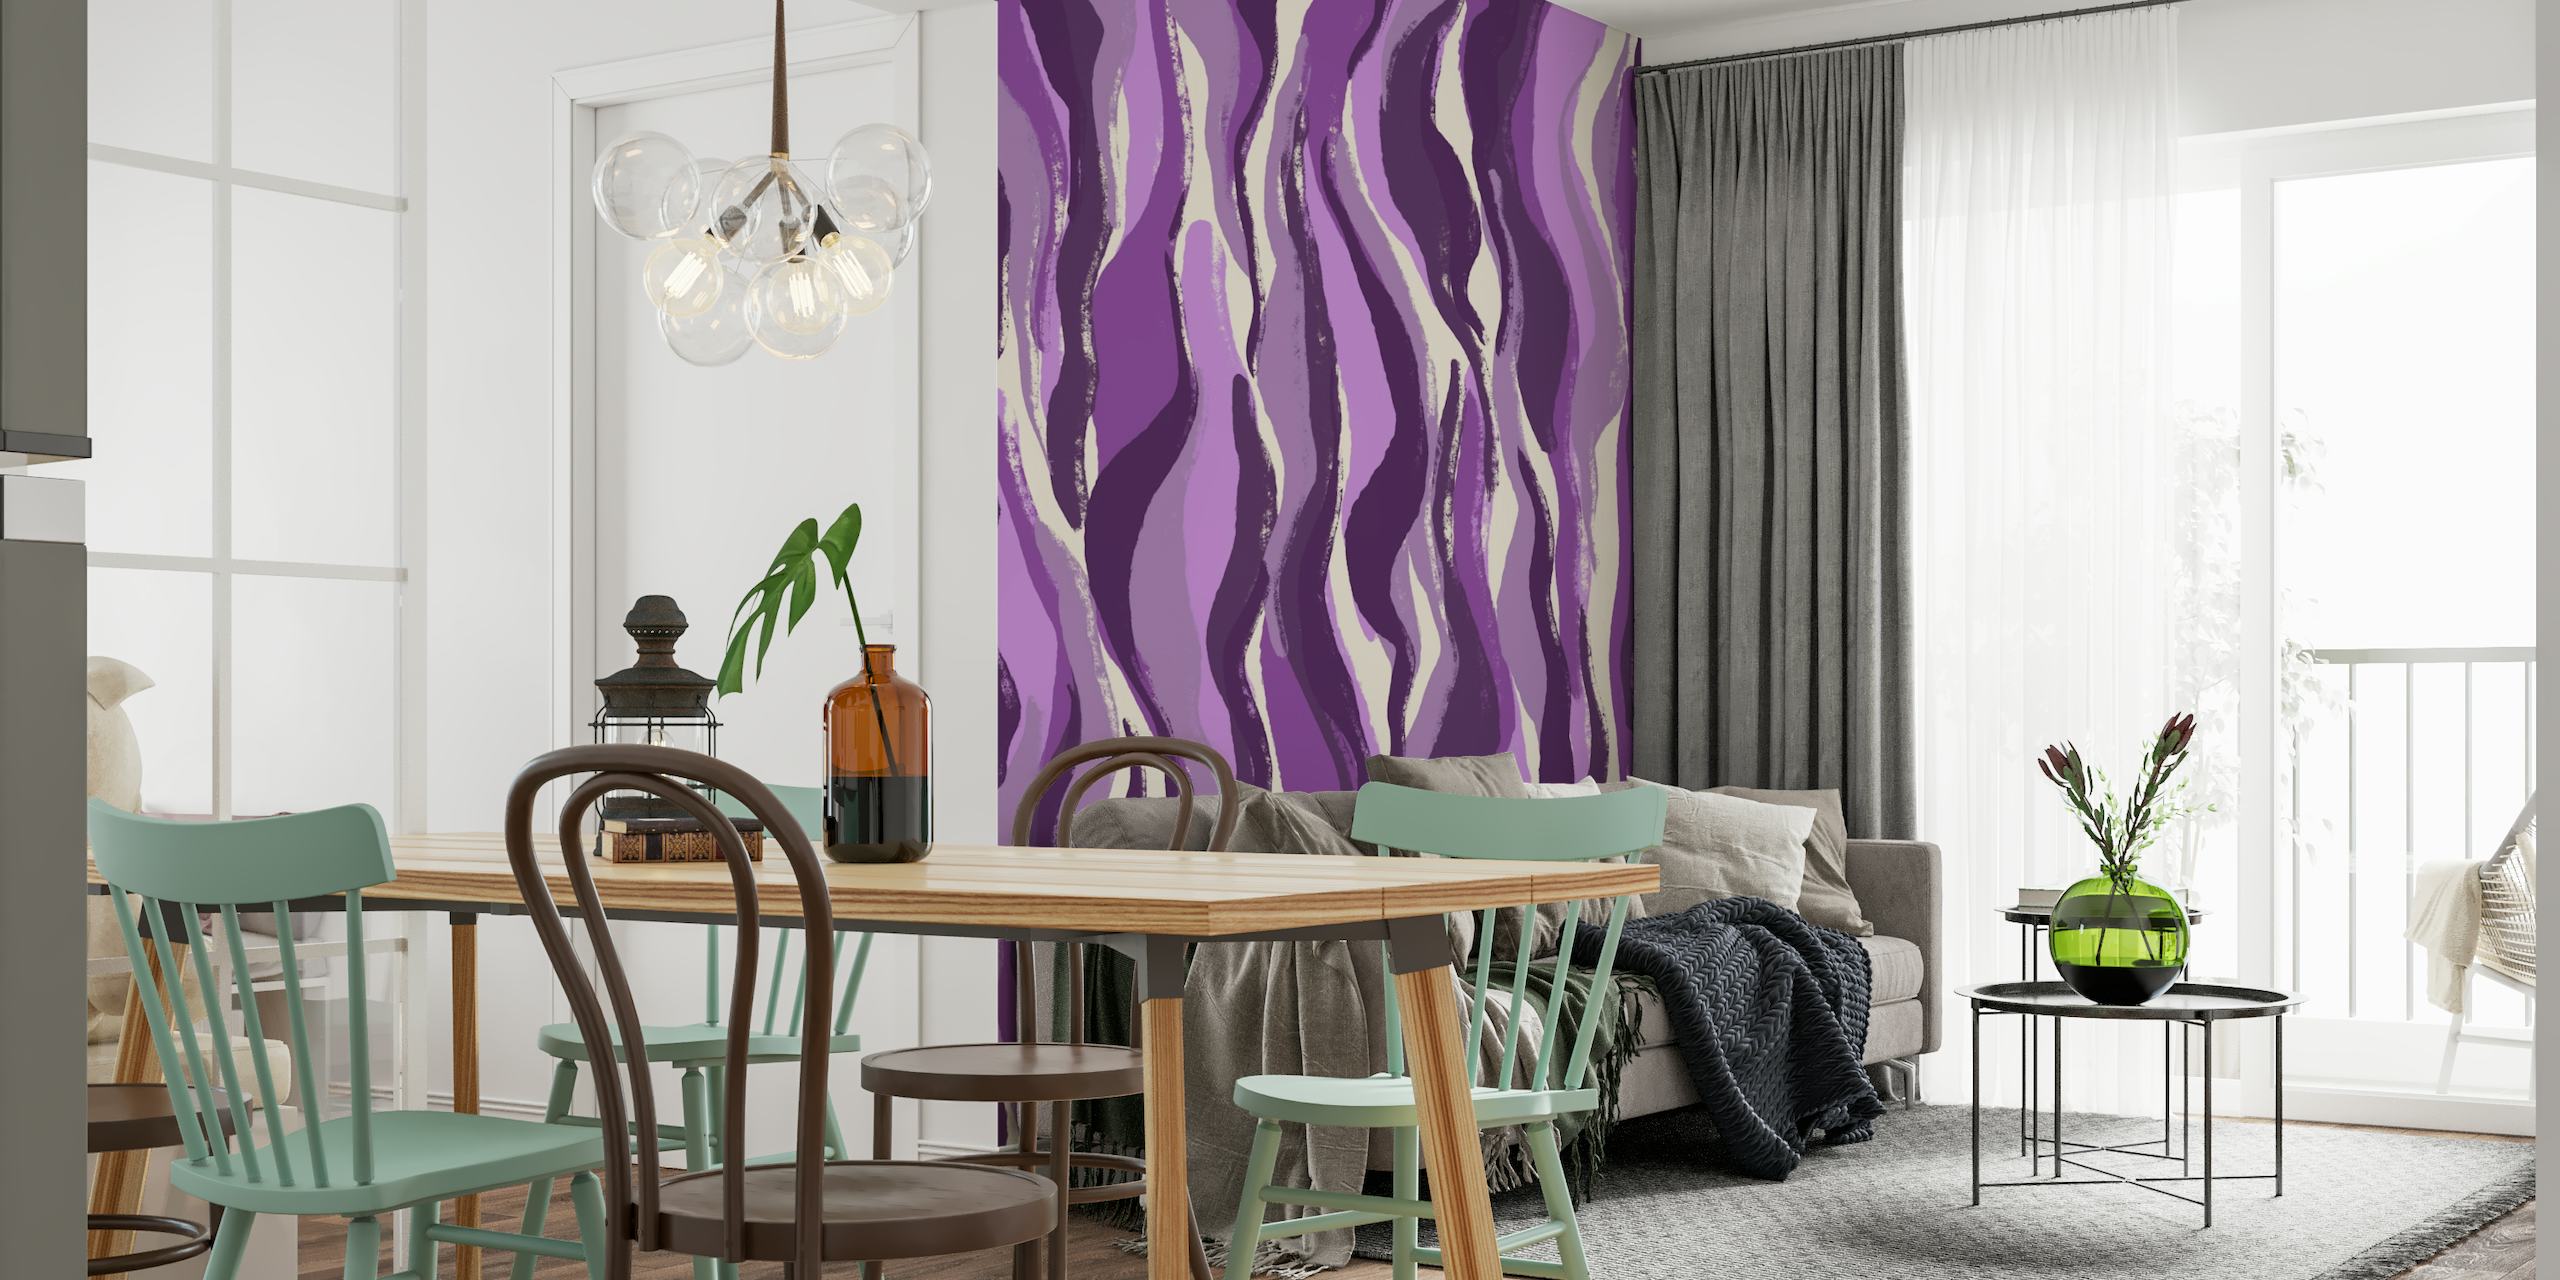 Exotic purple tiger stripe pattern wall mural